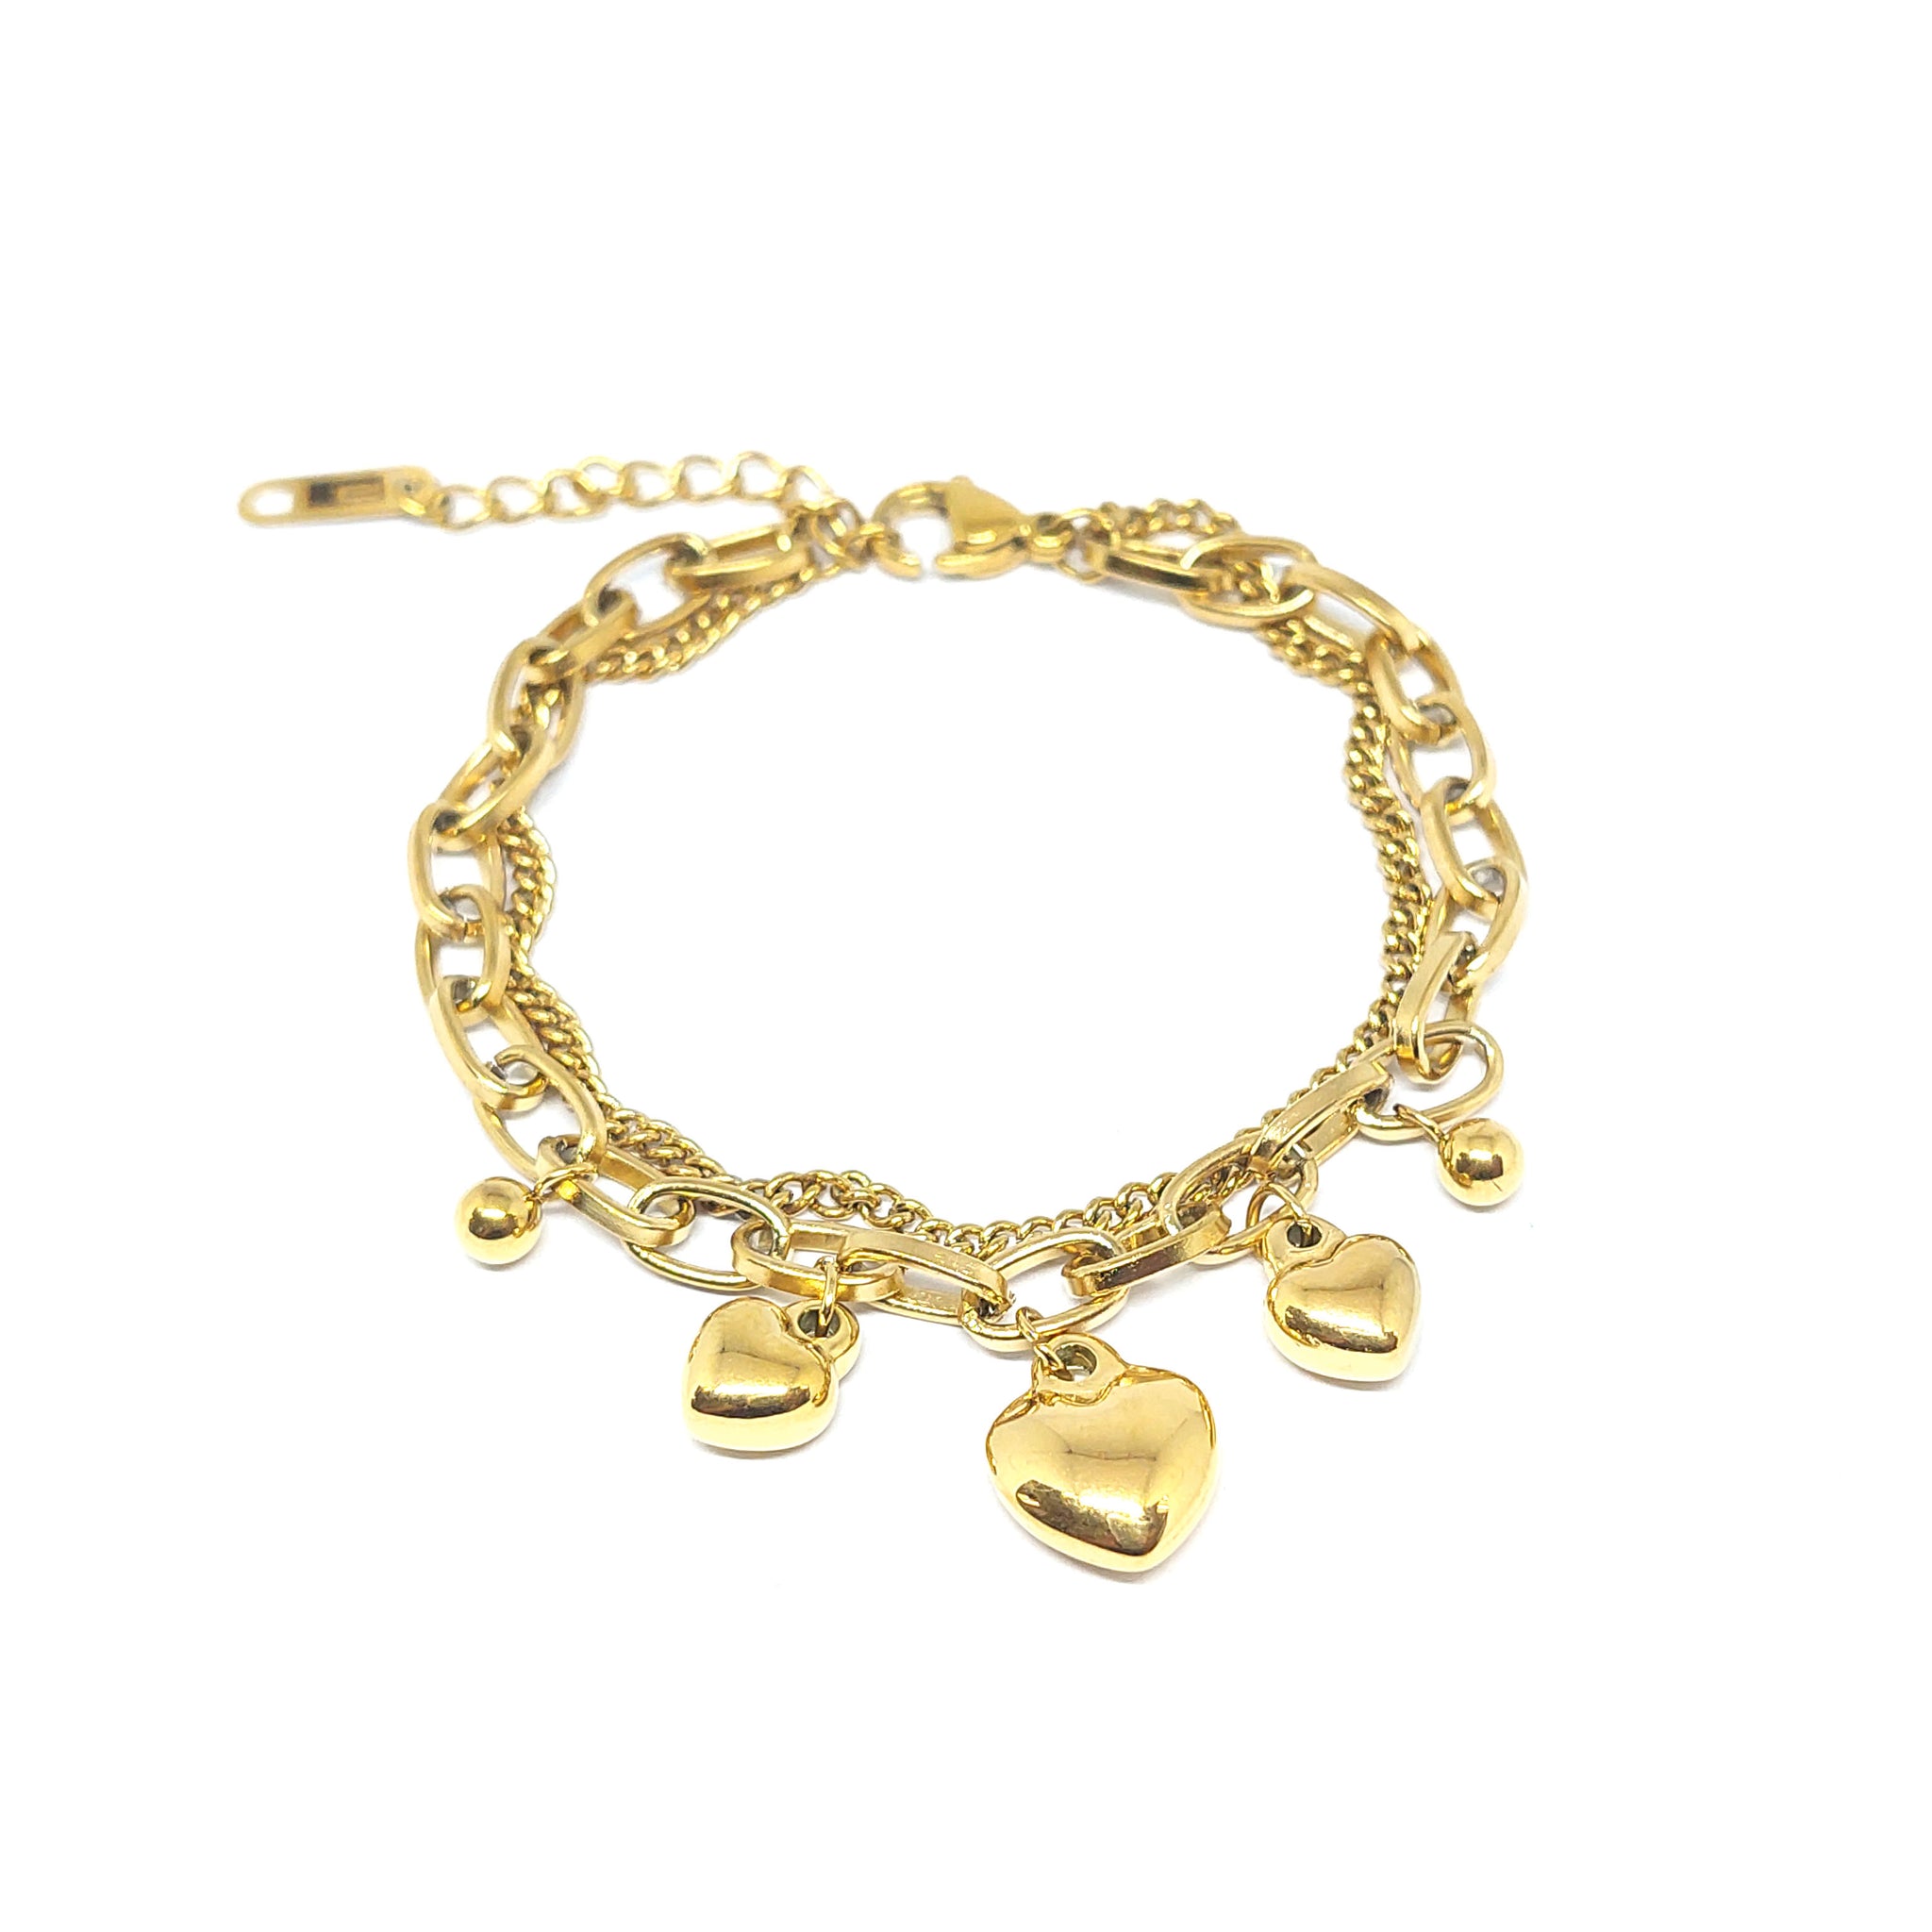 ESBL 7836: Gold-Plated Double Heart & Chain Bracelet